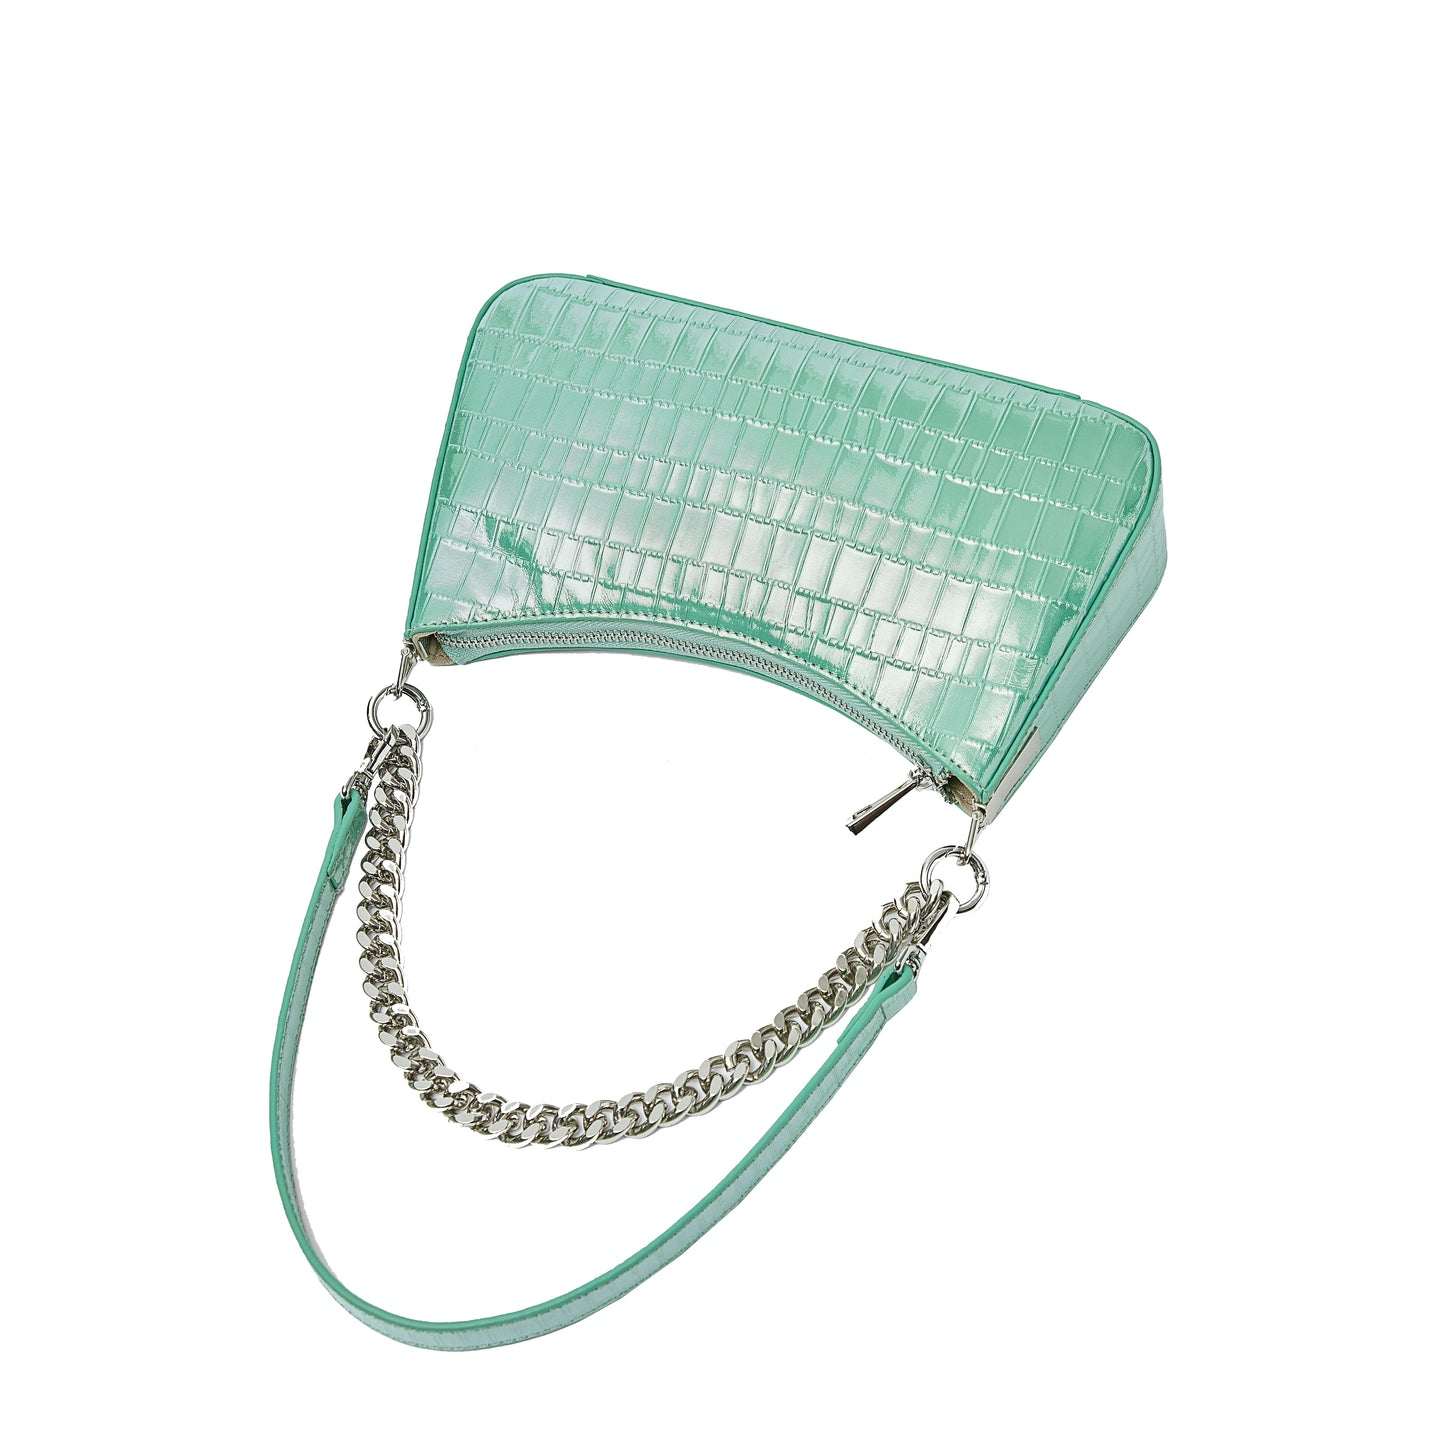 Women's genuine cowhide leather handbag Ingot chain design